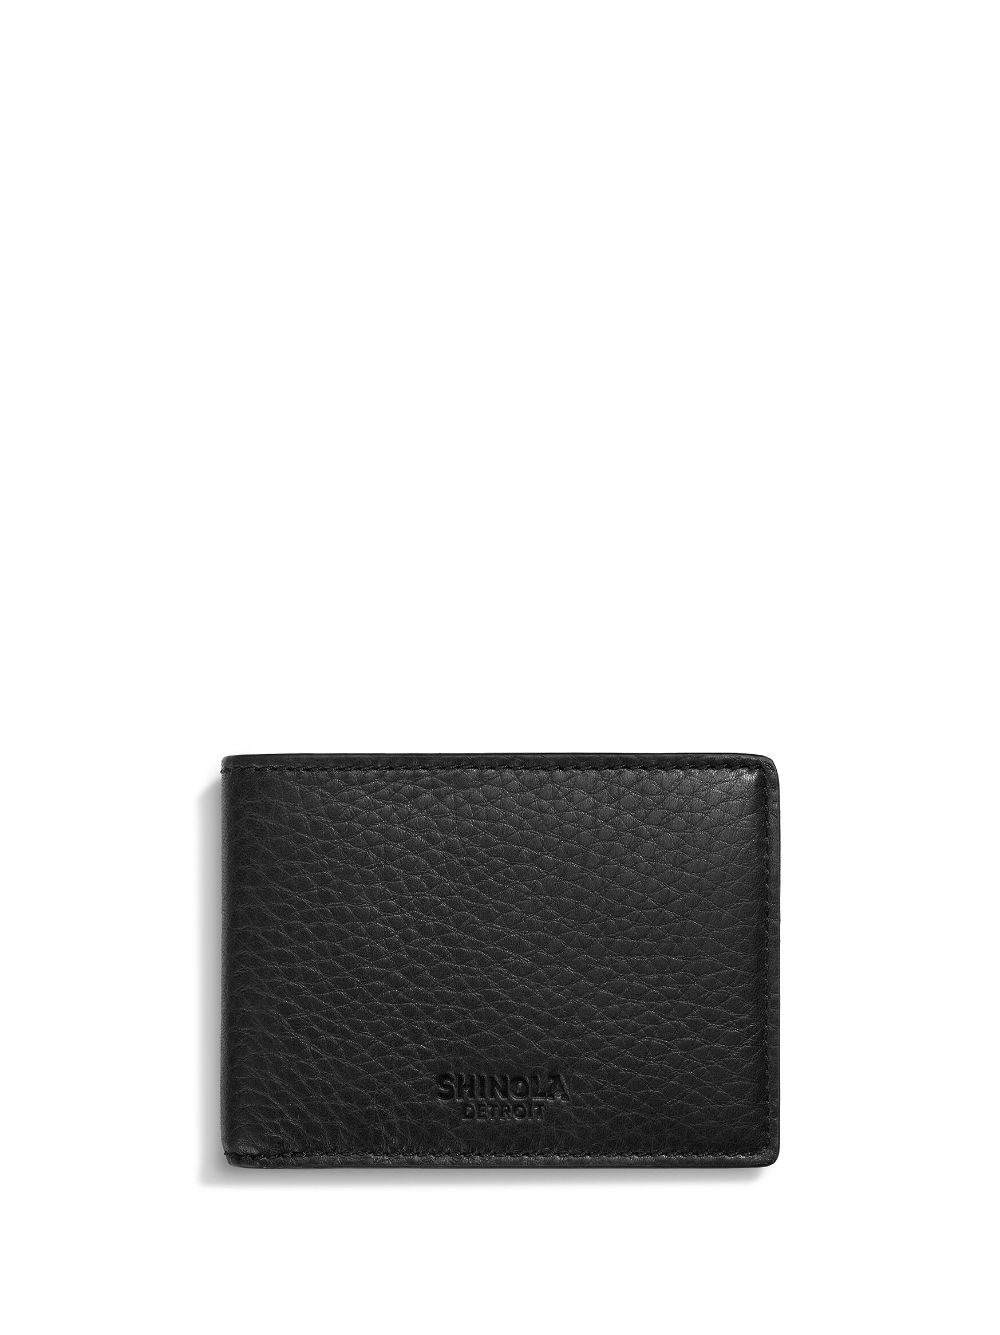 Shinola slim bifold wallet - Black von Shinola